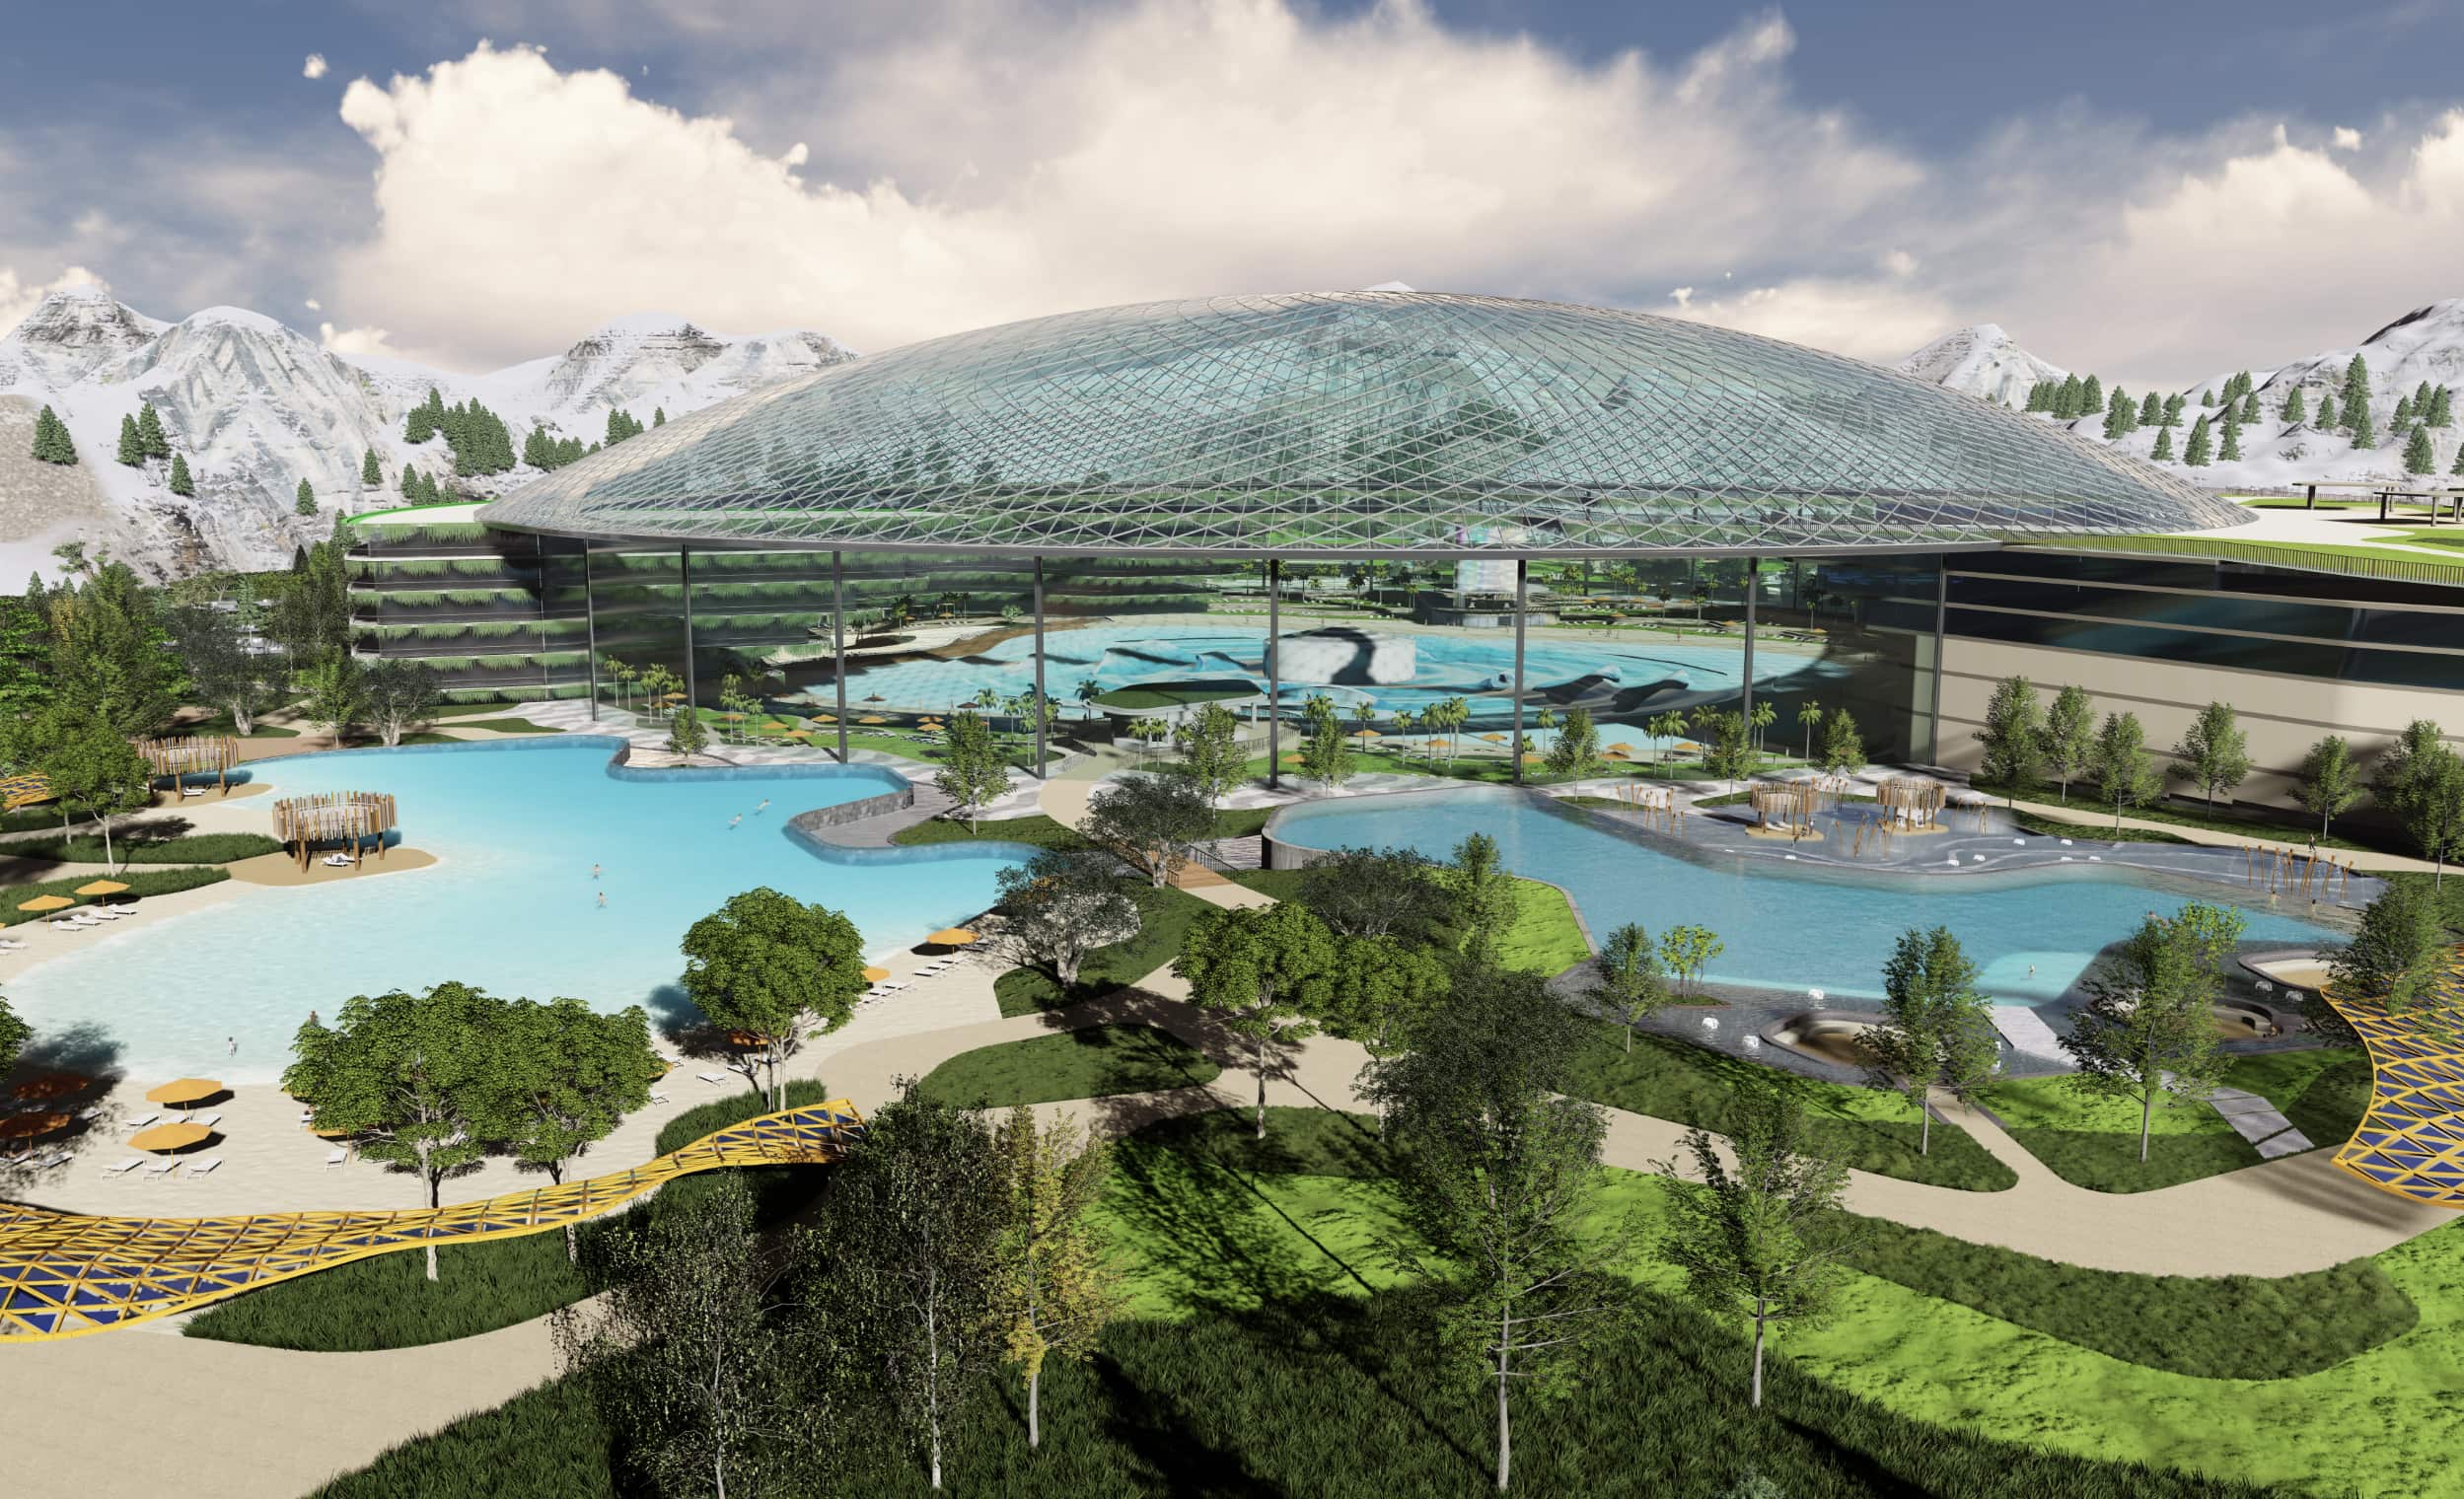 surf lakes unveil futuristic dome concept